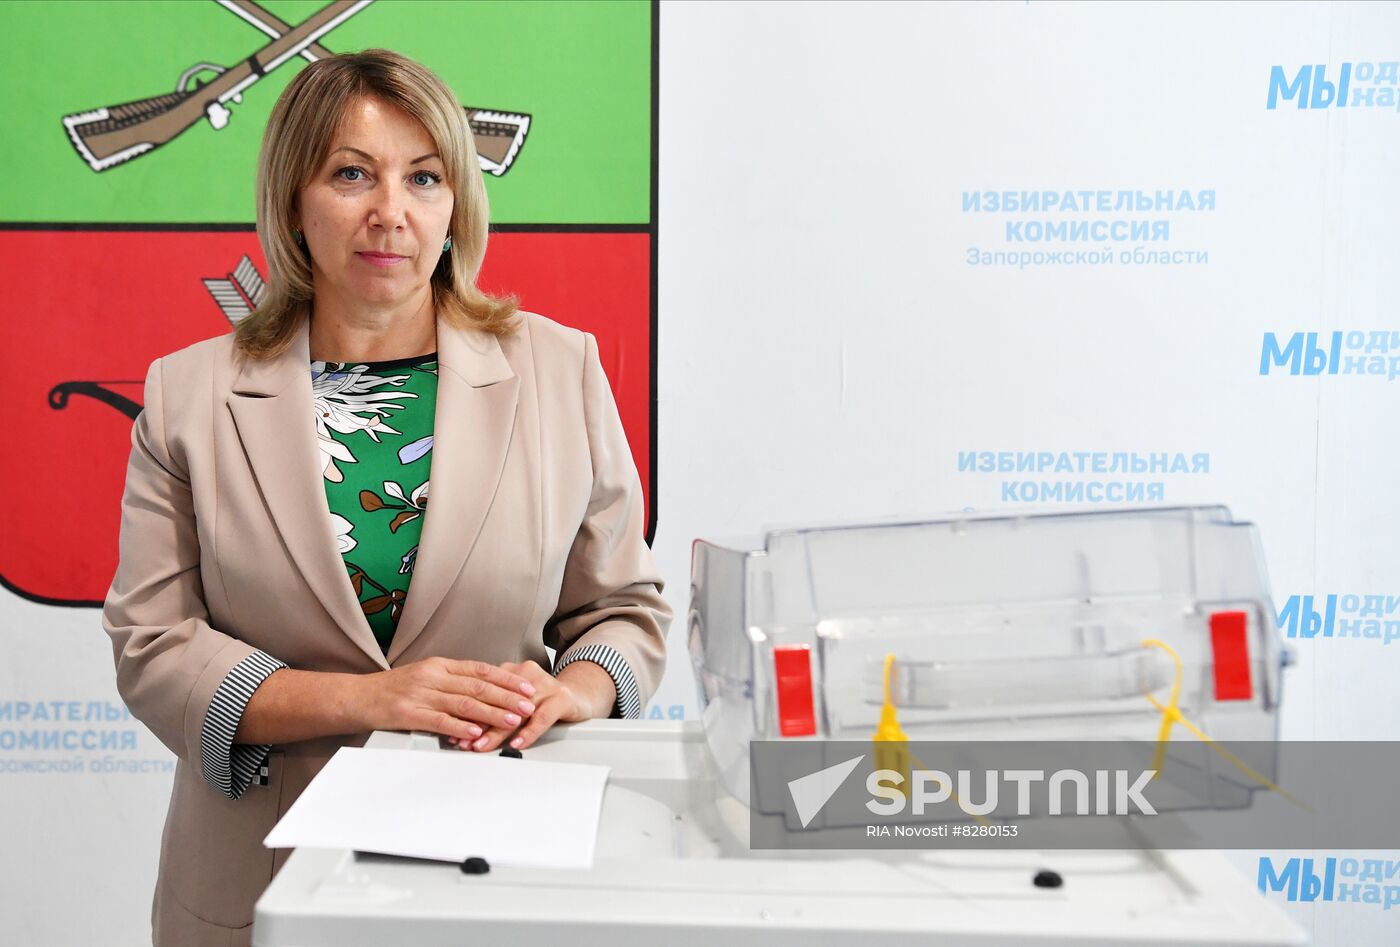 DPR LPR Ukraine Russia Joining Referendum Preparations